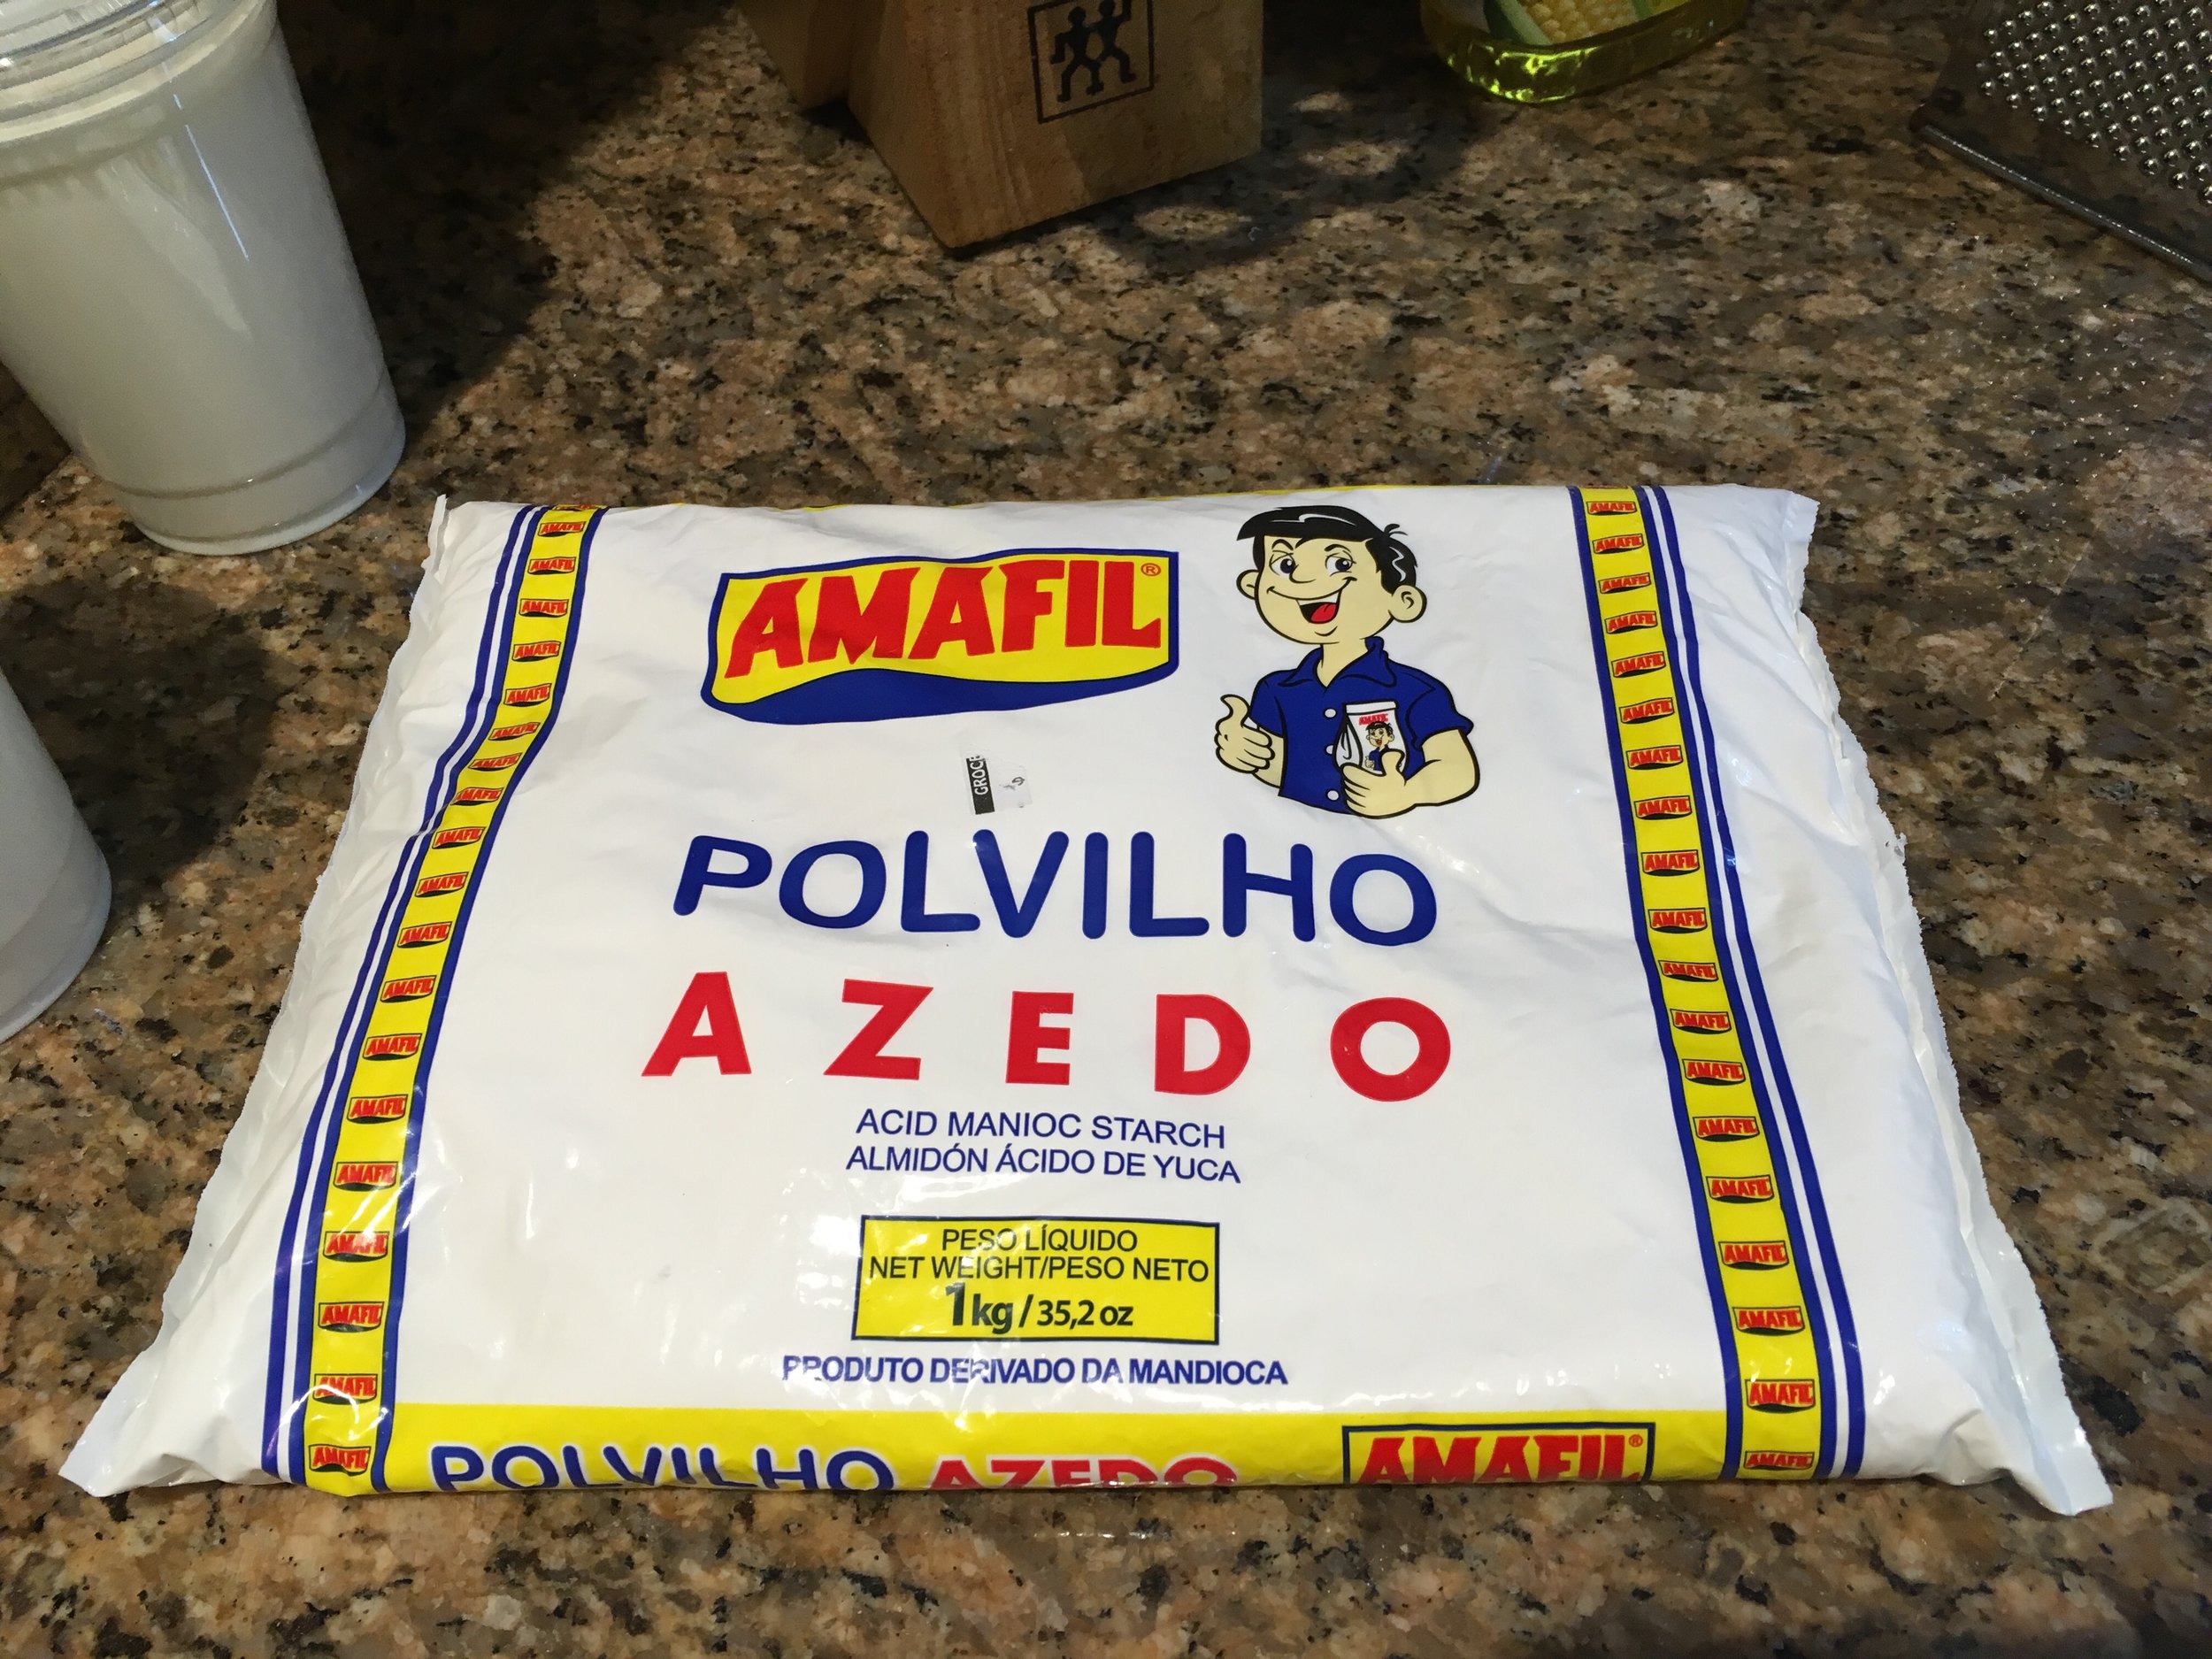 Brazilian "sour" cassava flour